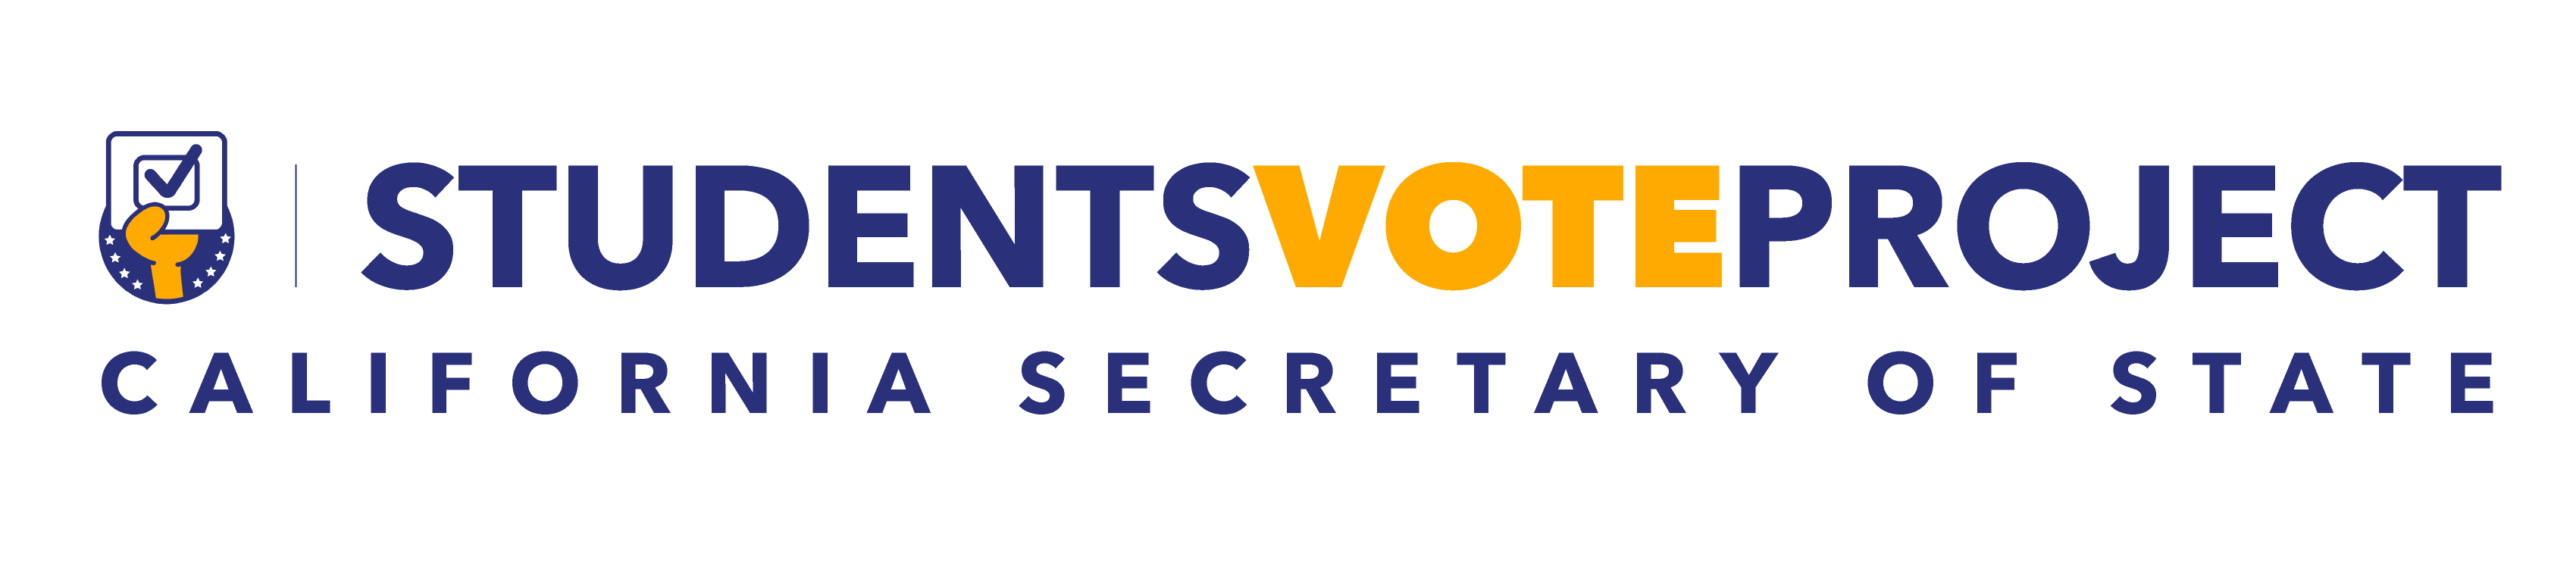 California Secretary of State Students Vote Project Logo